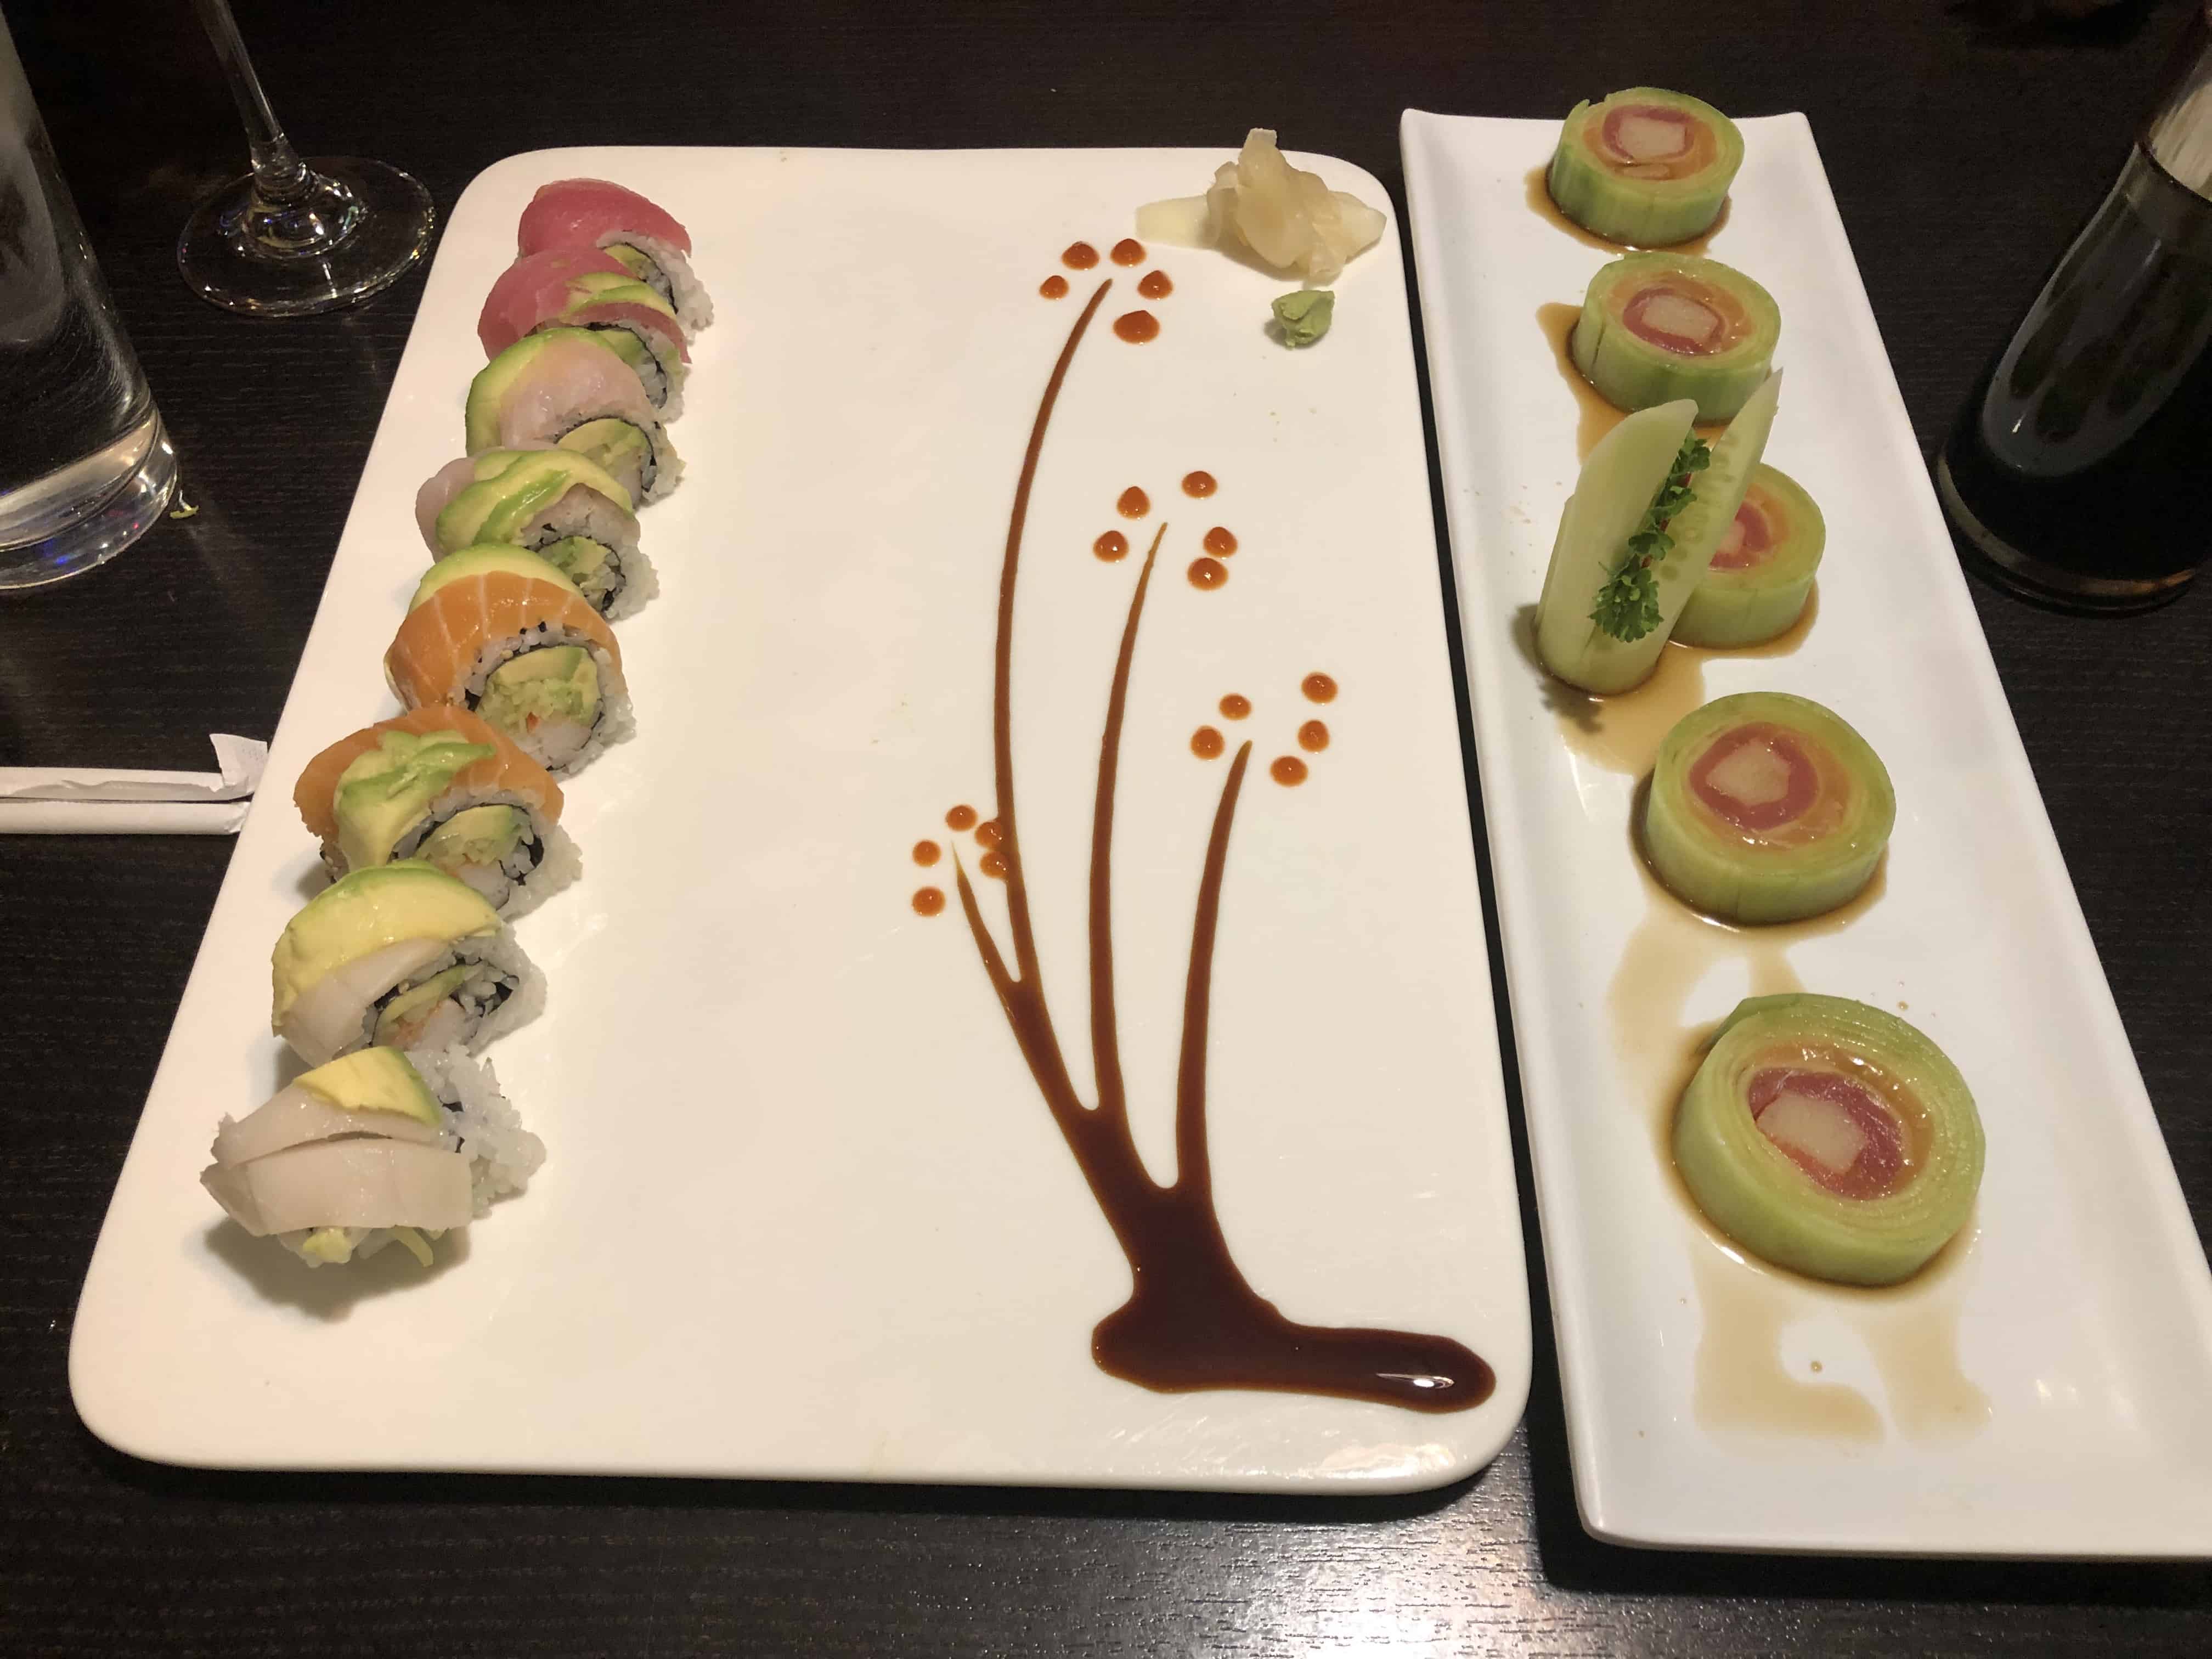 Creative sushi rolls at Furin in Valparaiso, Indiana